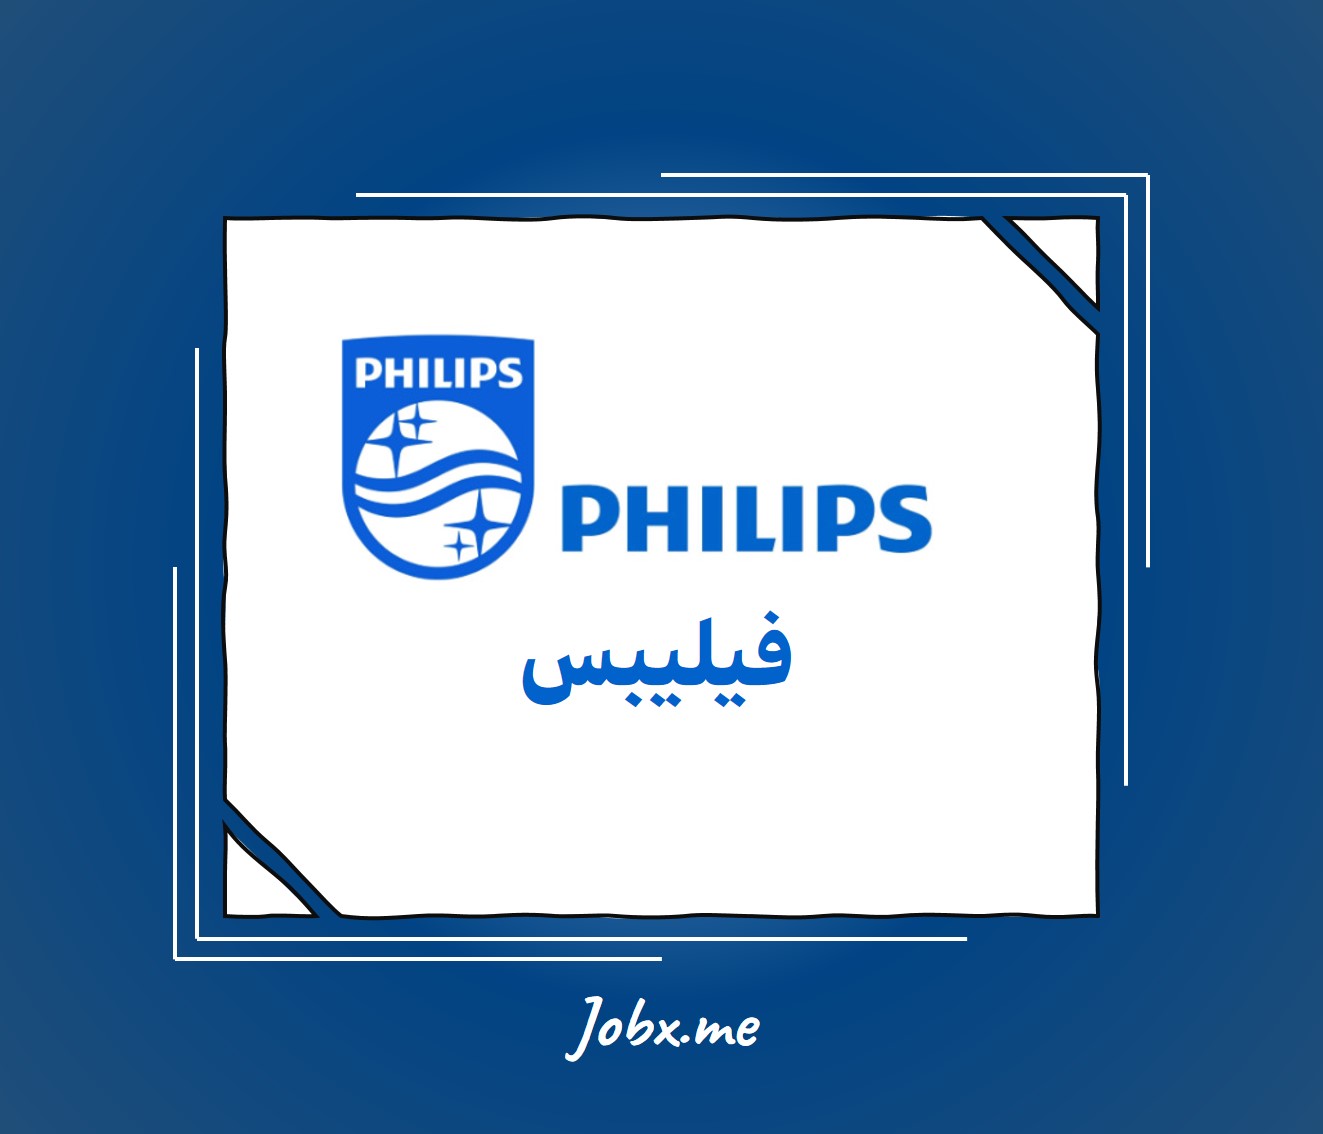 Philips Careers